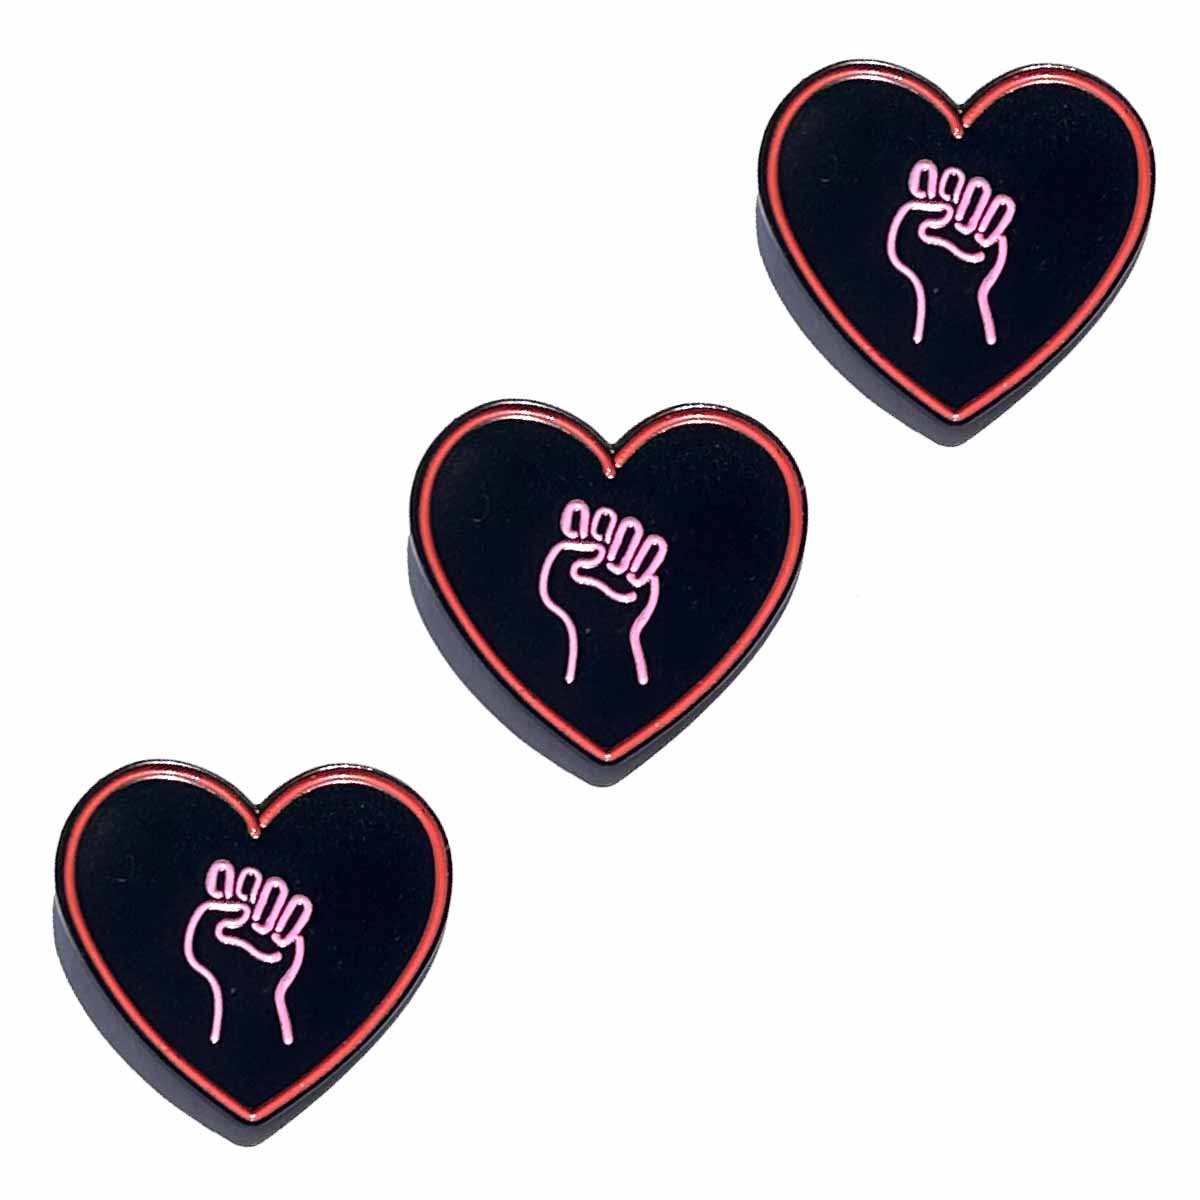 3 Love As Activism heart solidarity fist pins